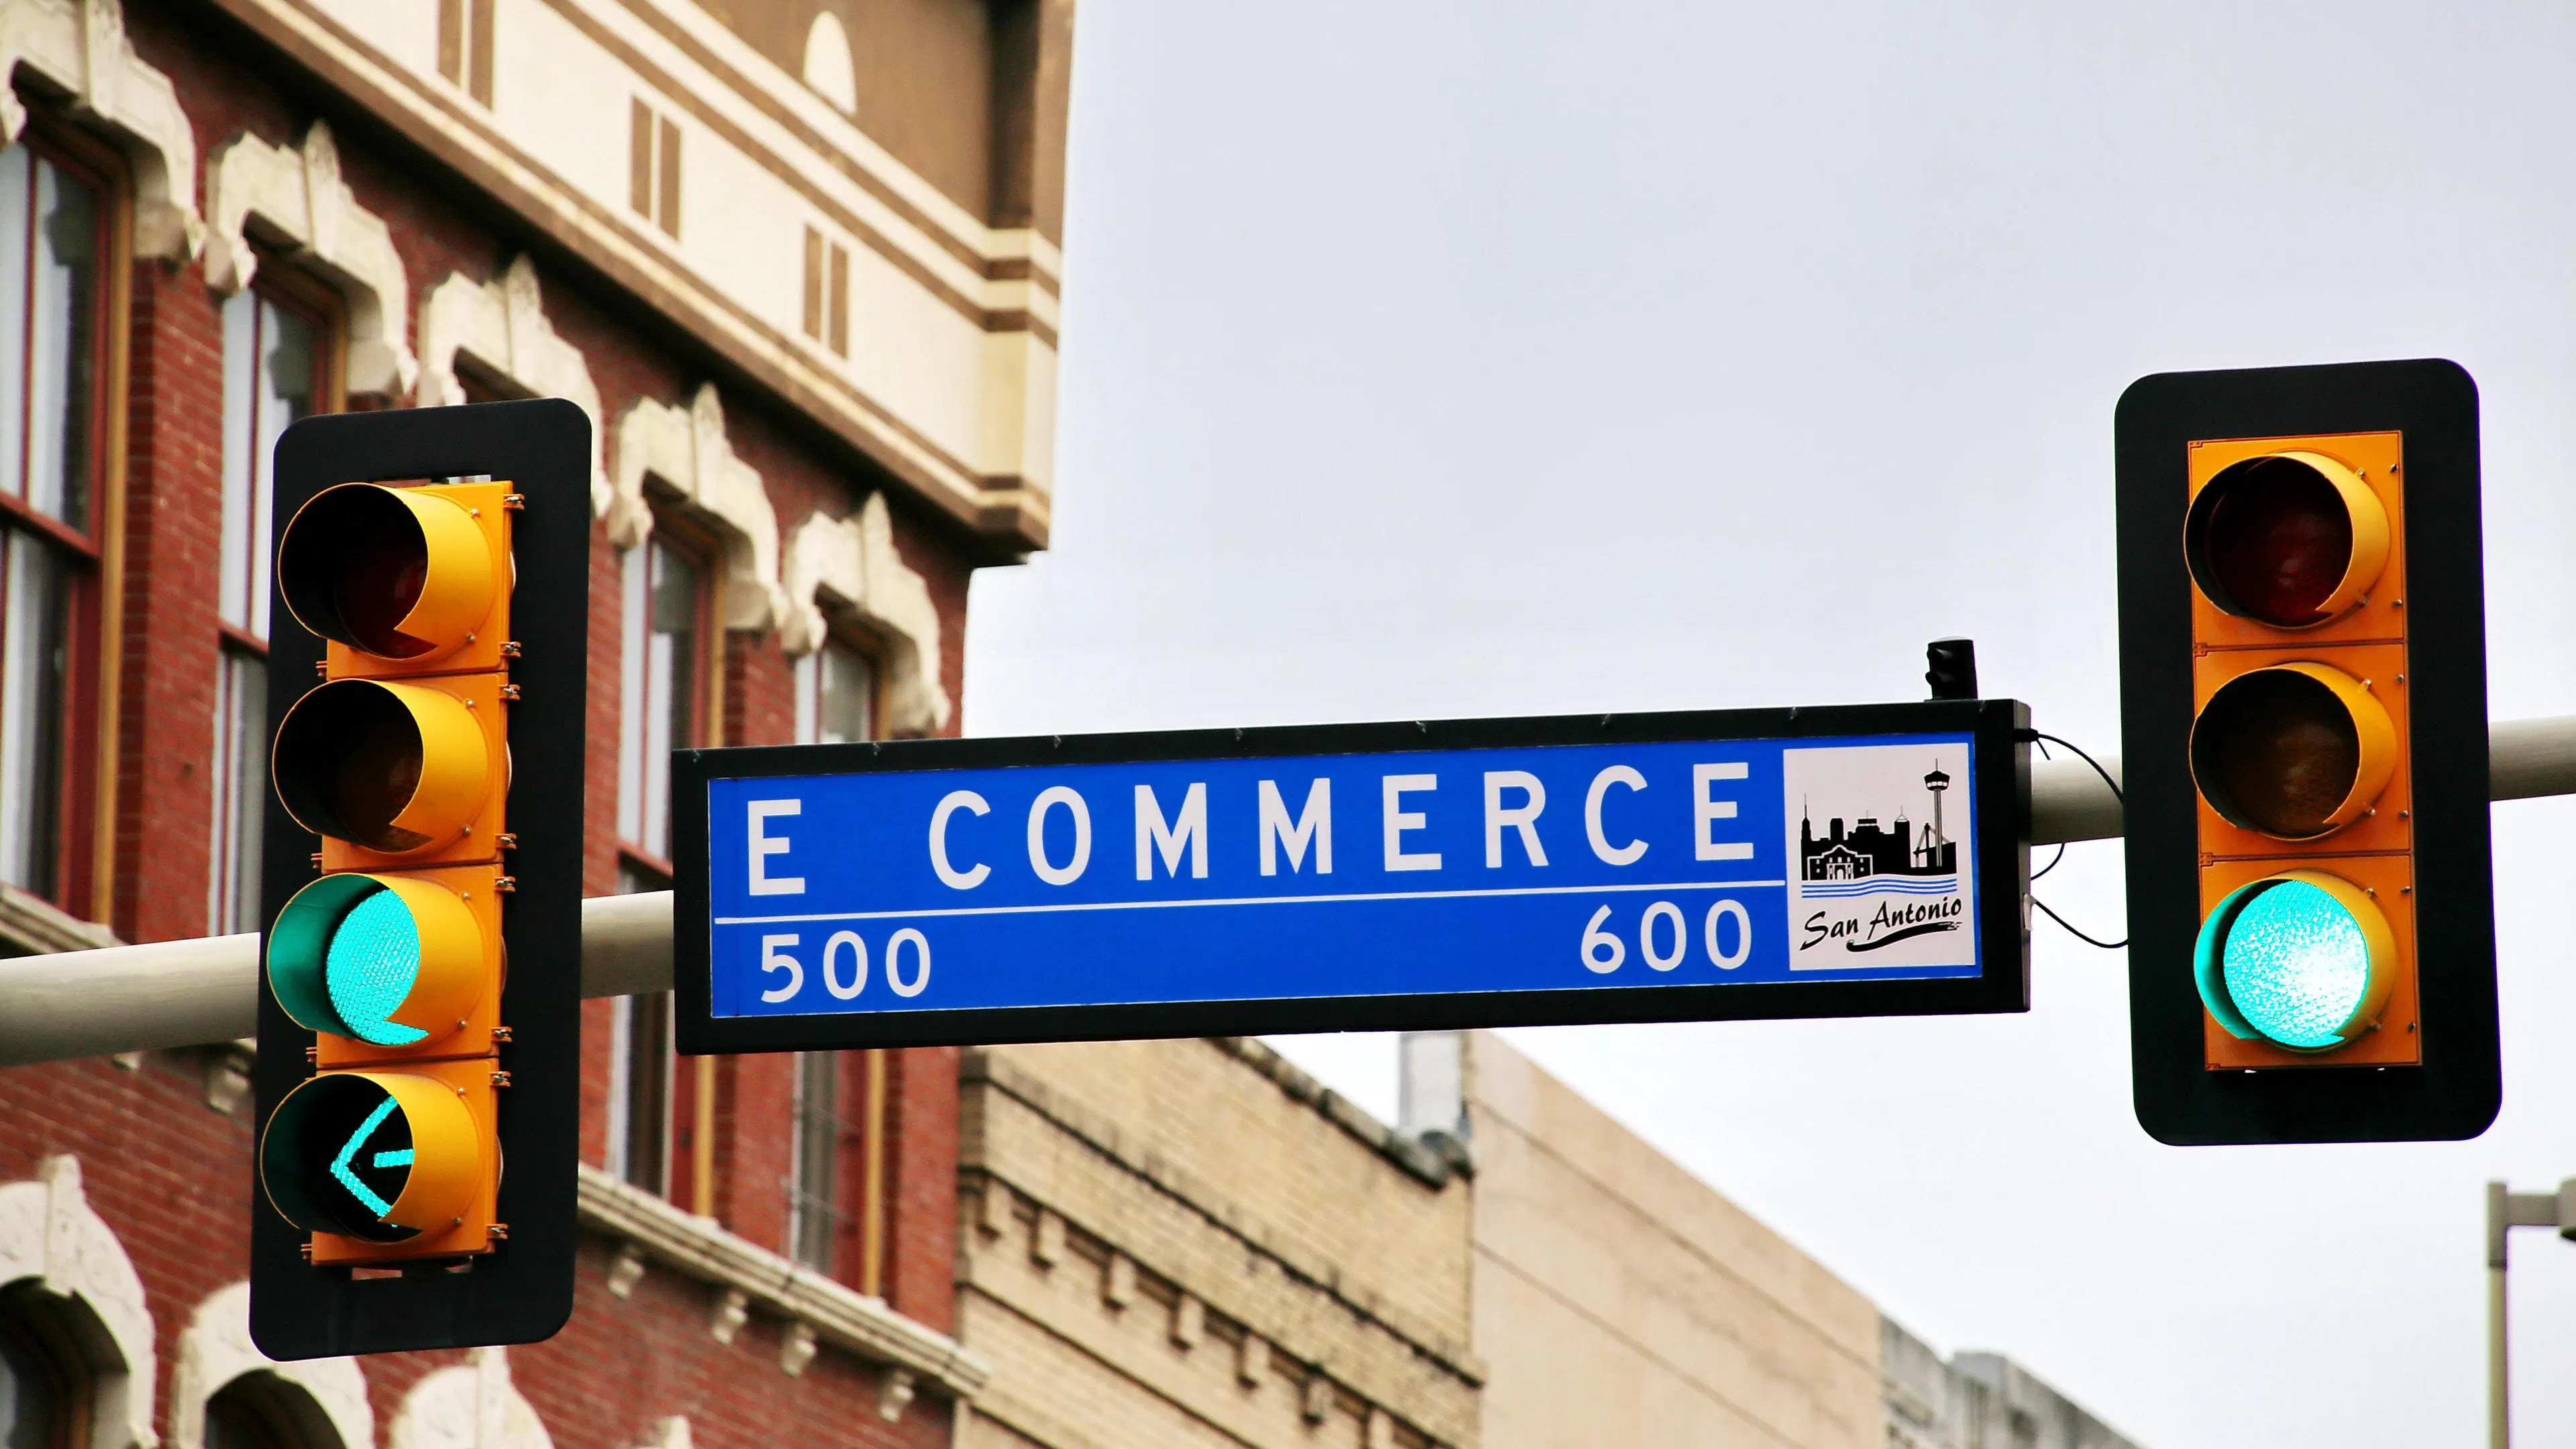 Ecommerce street sign photo